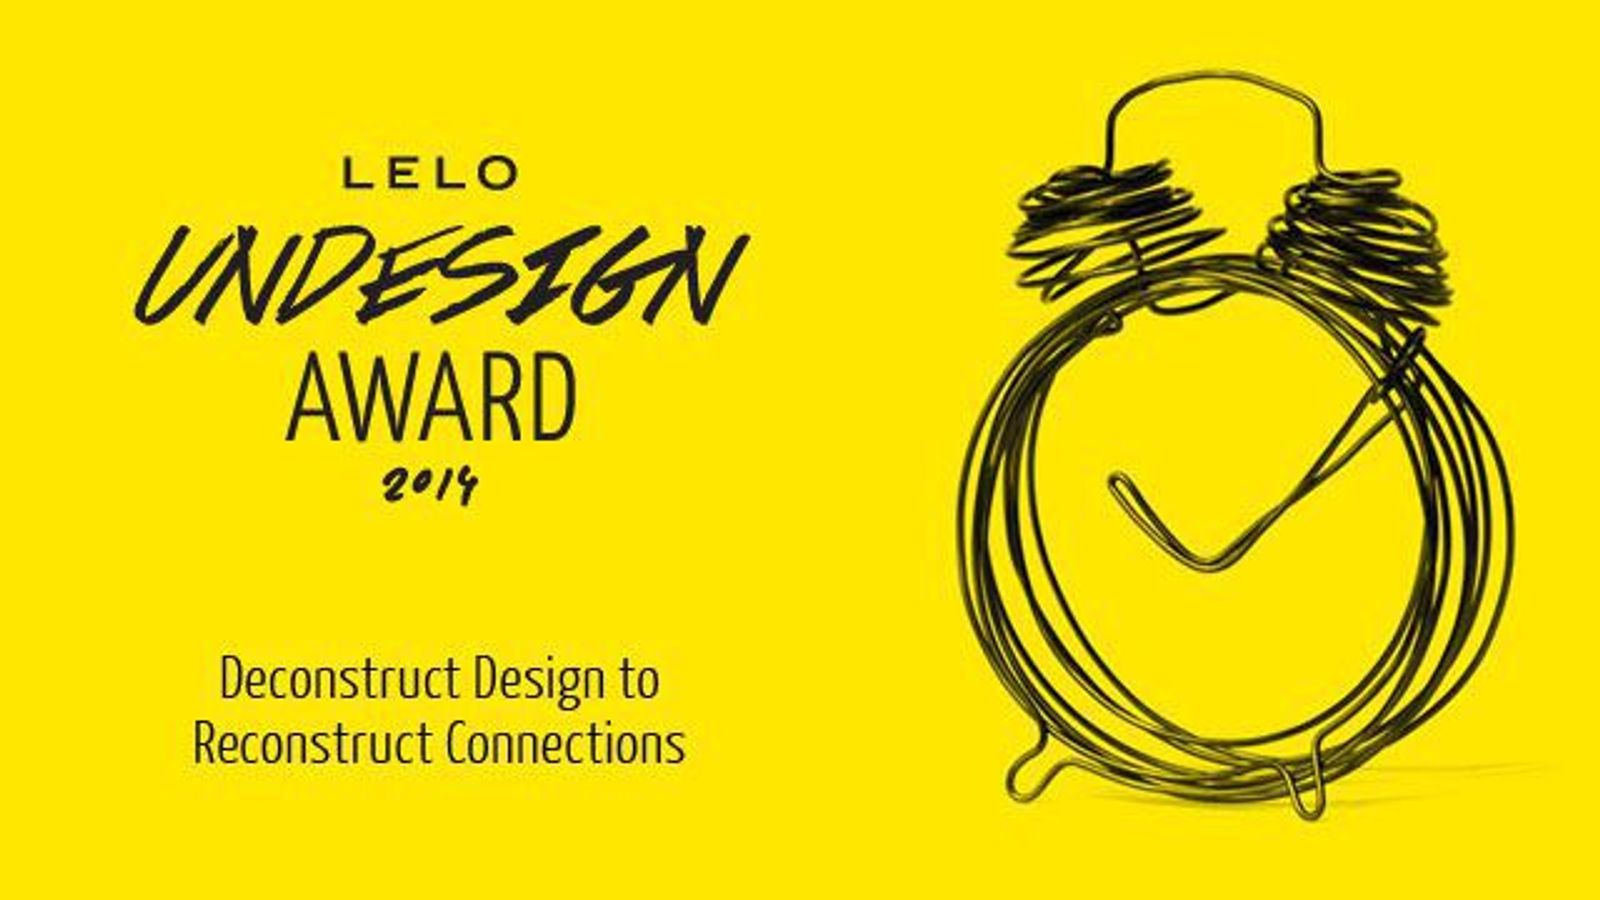 LELO Announces UnDesign Award Winners